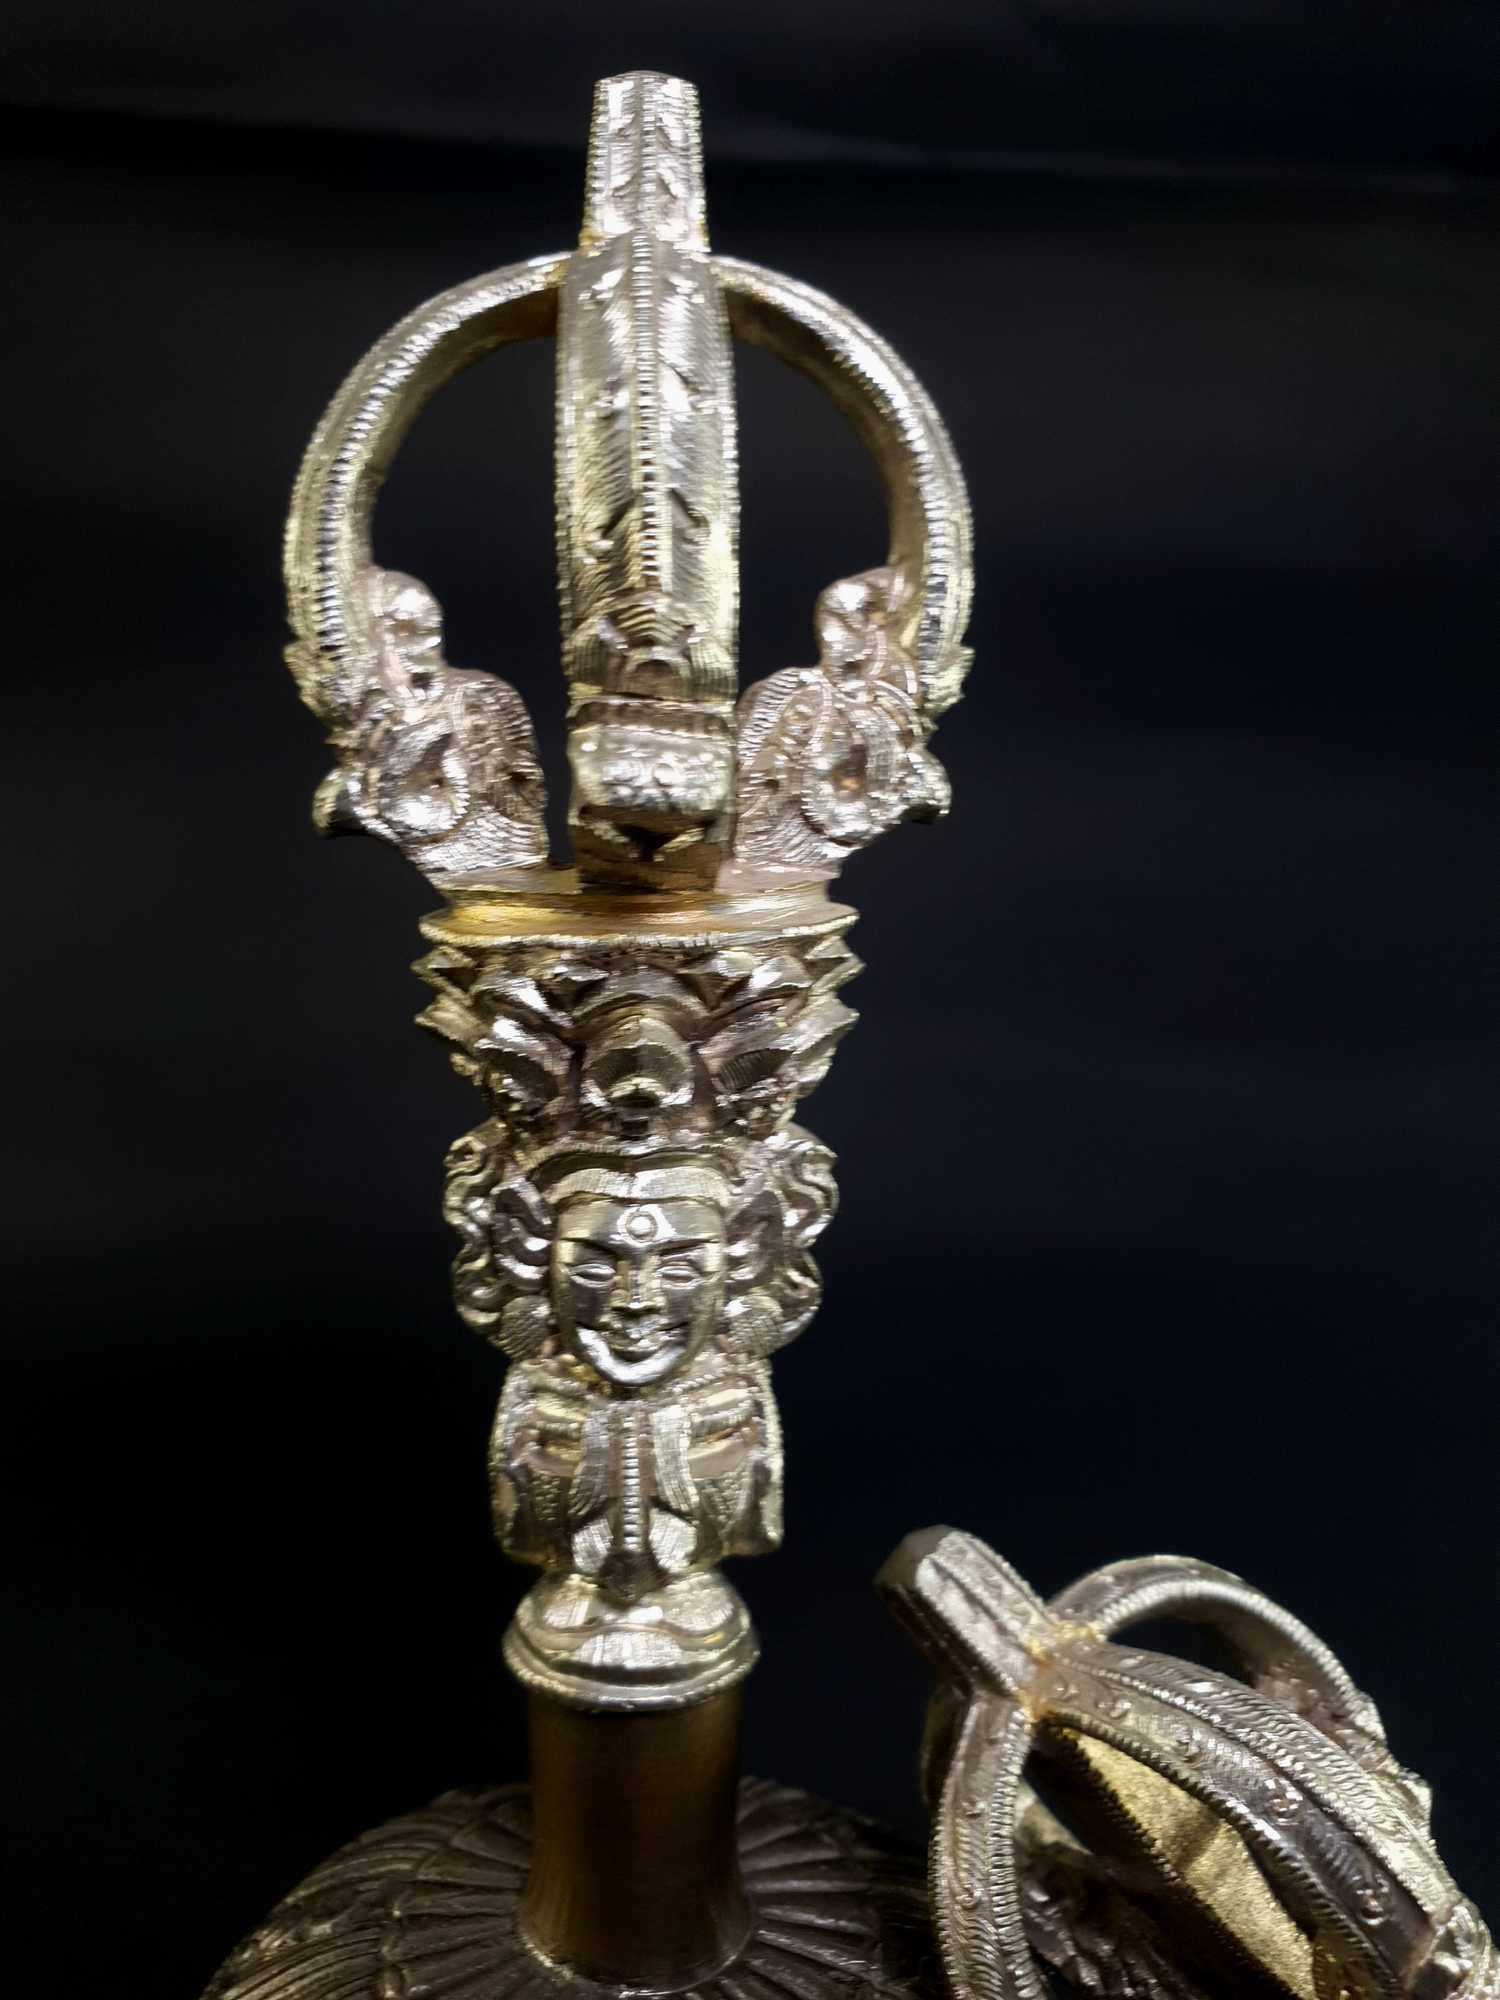 dehradun, hq Bronze Bell And Dorje vajra, full Silver Plated